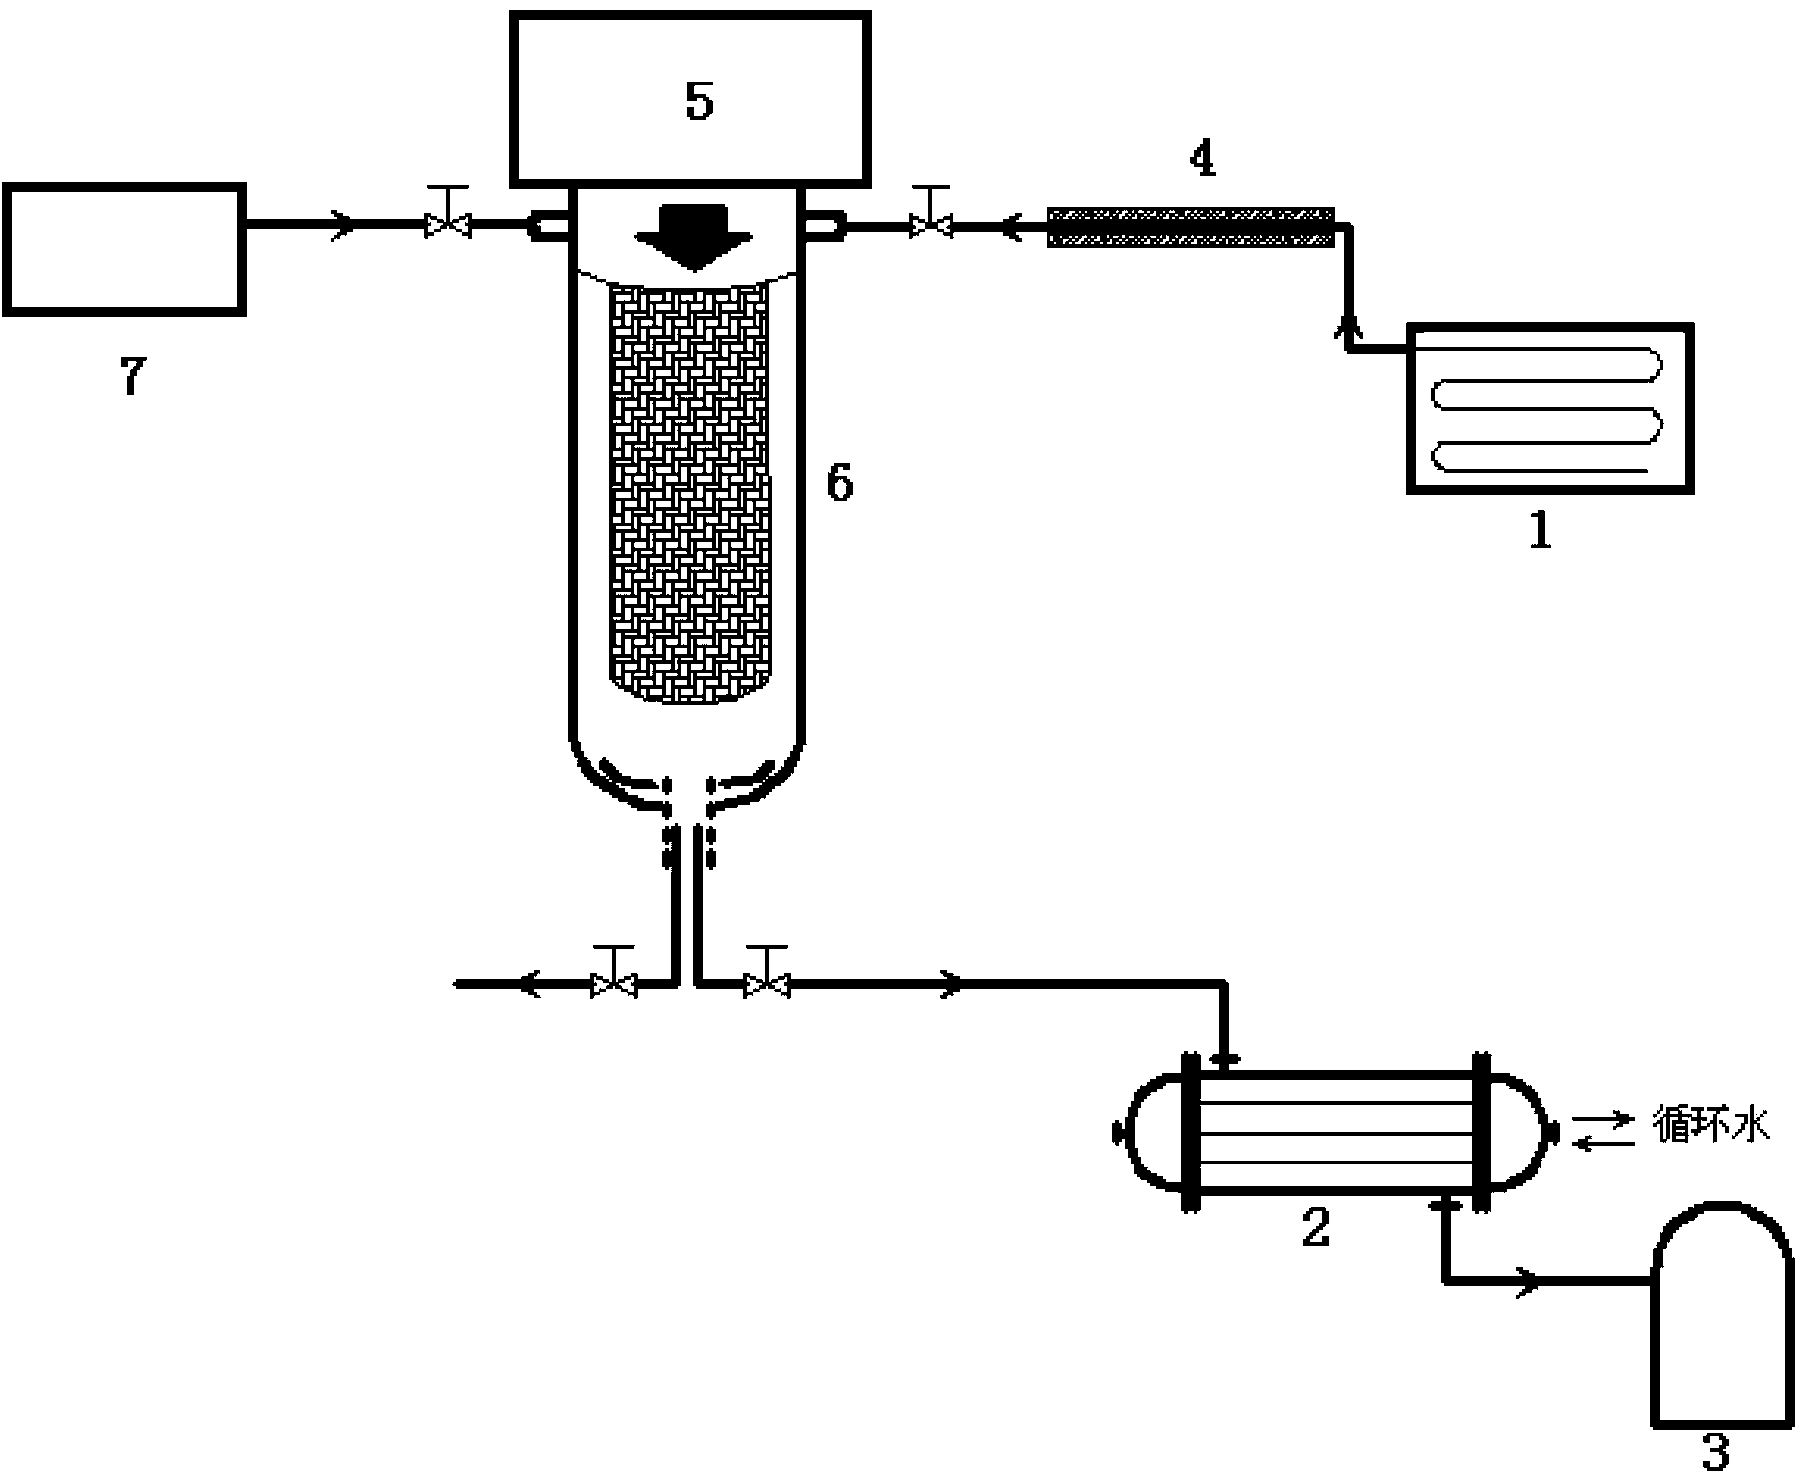 Desorption and regeneration method for organic matter adsorbent